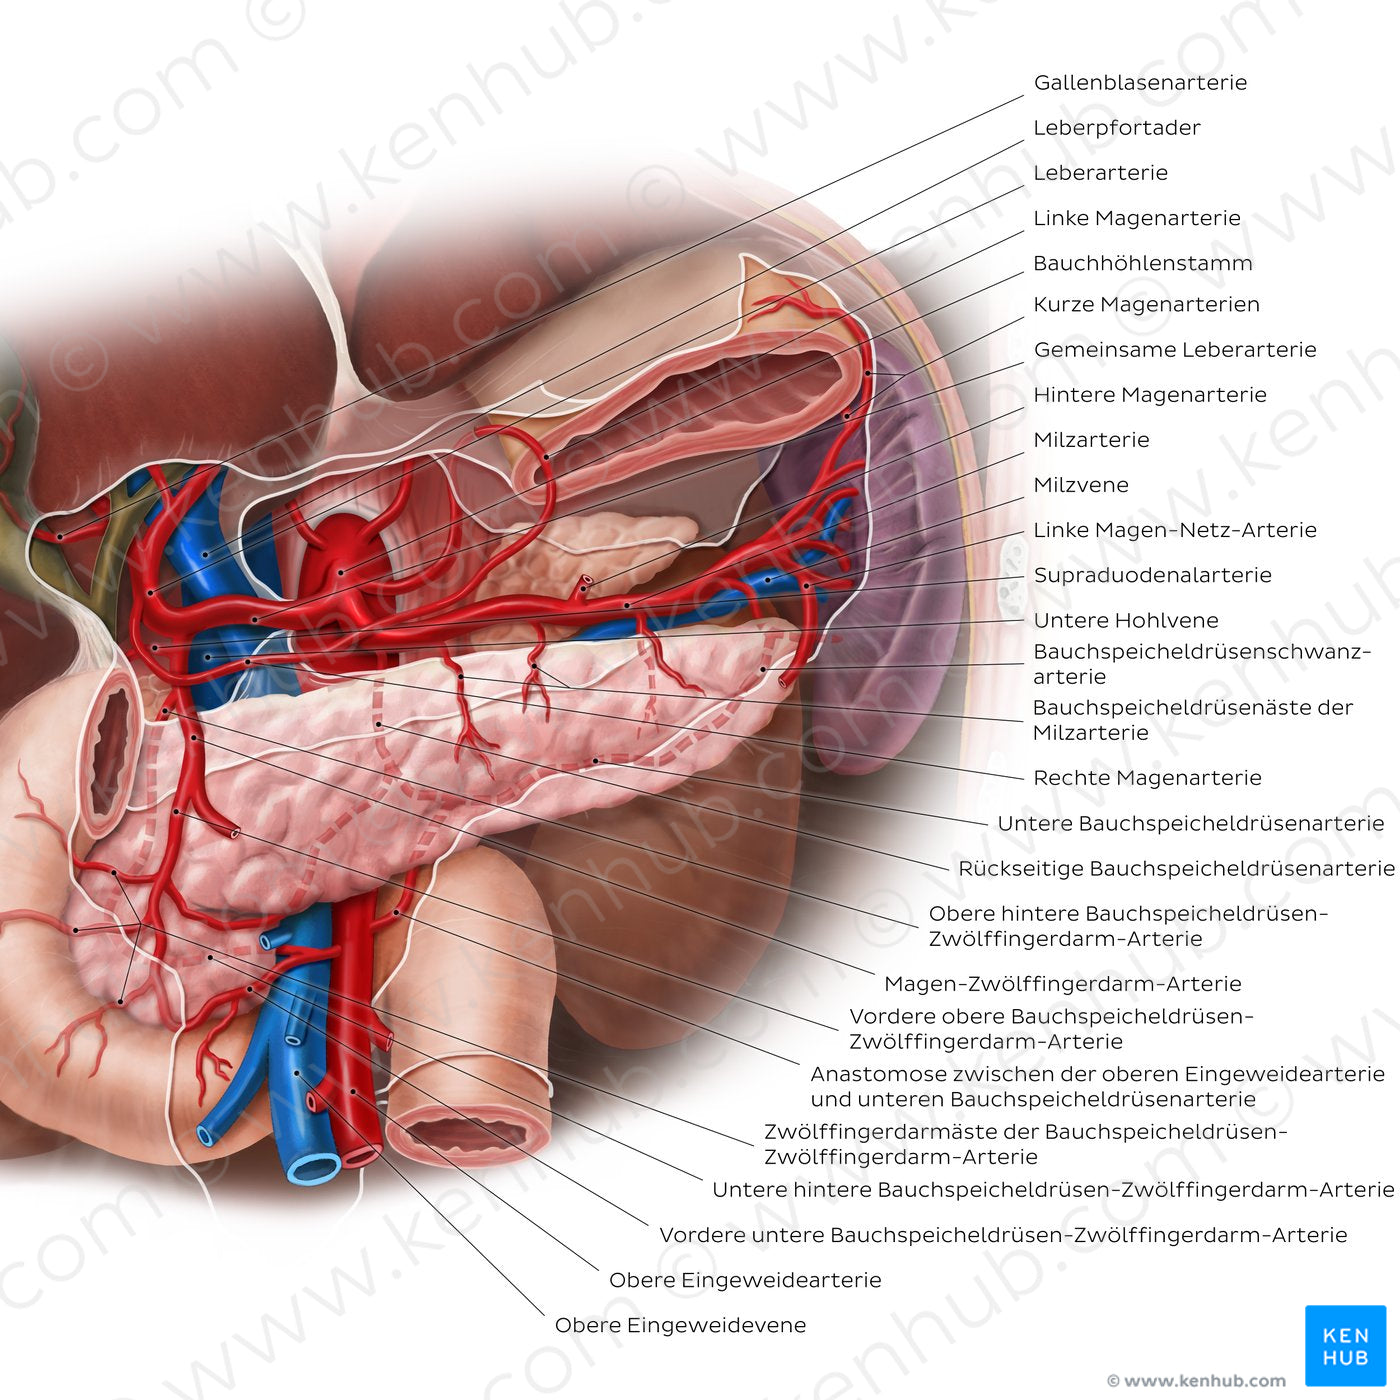 Arteries of the pancreas, duodenum and spleen (German)